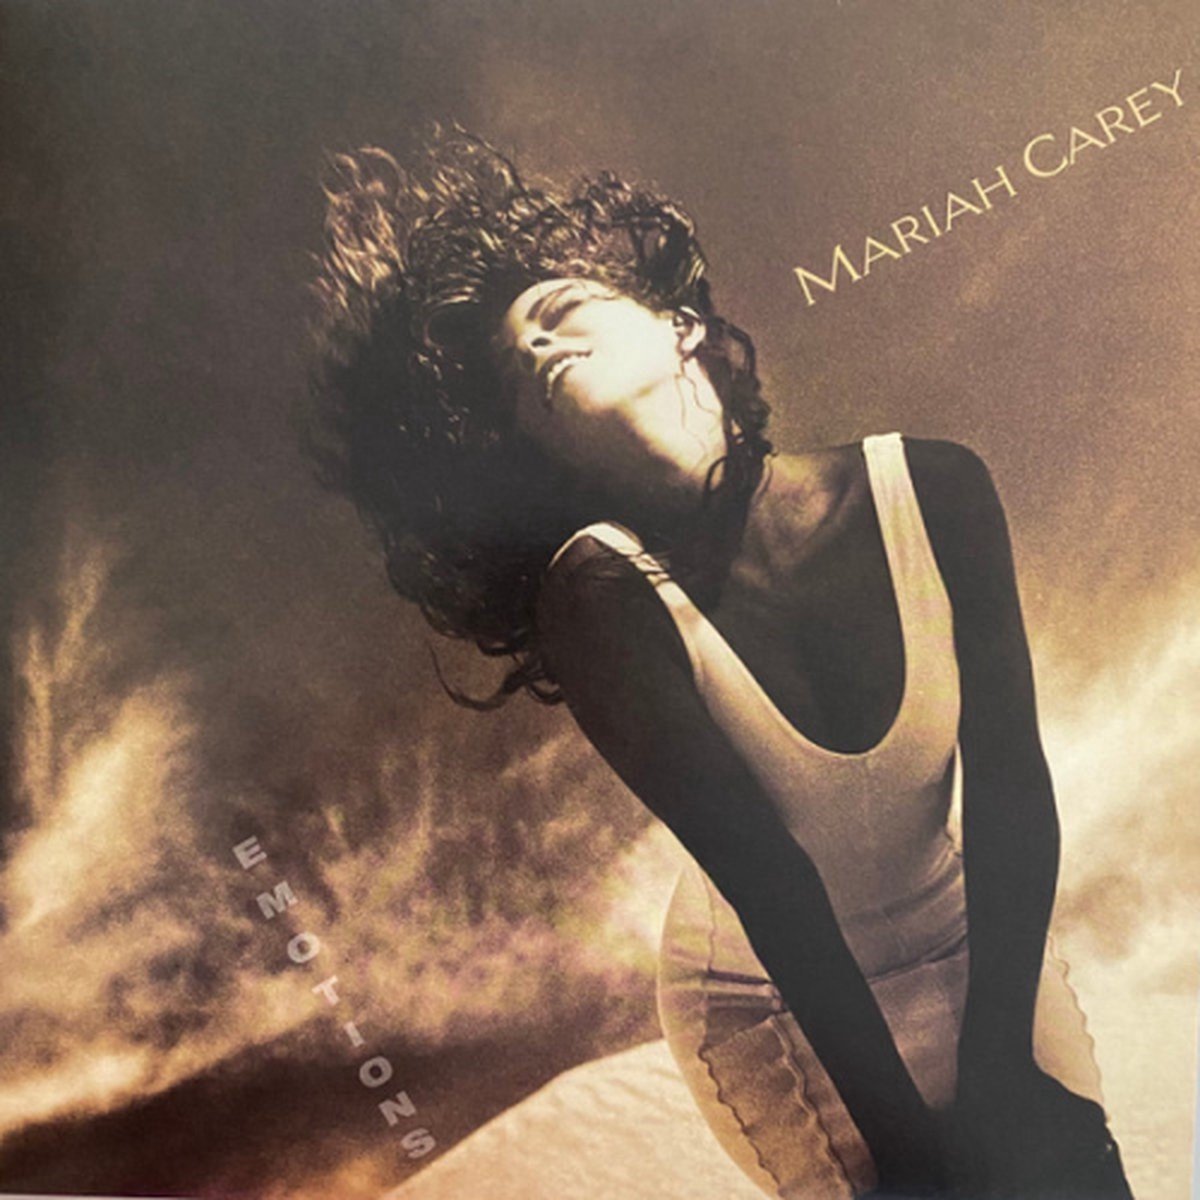 Mariah Carey - Emotions (LP) - Mariah Carey